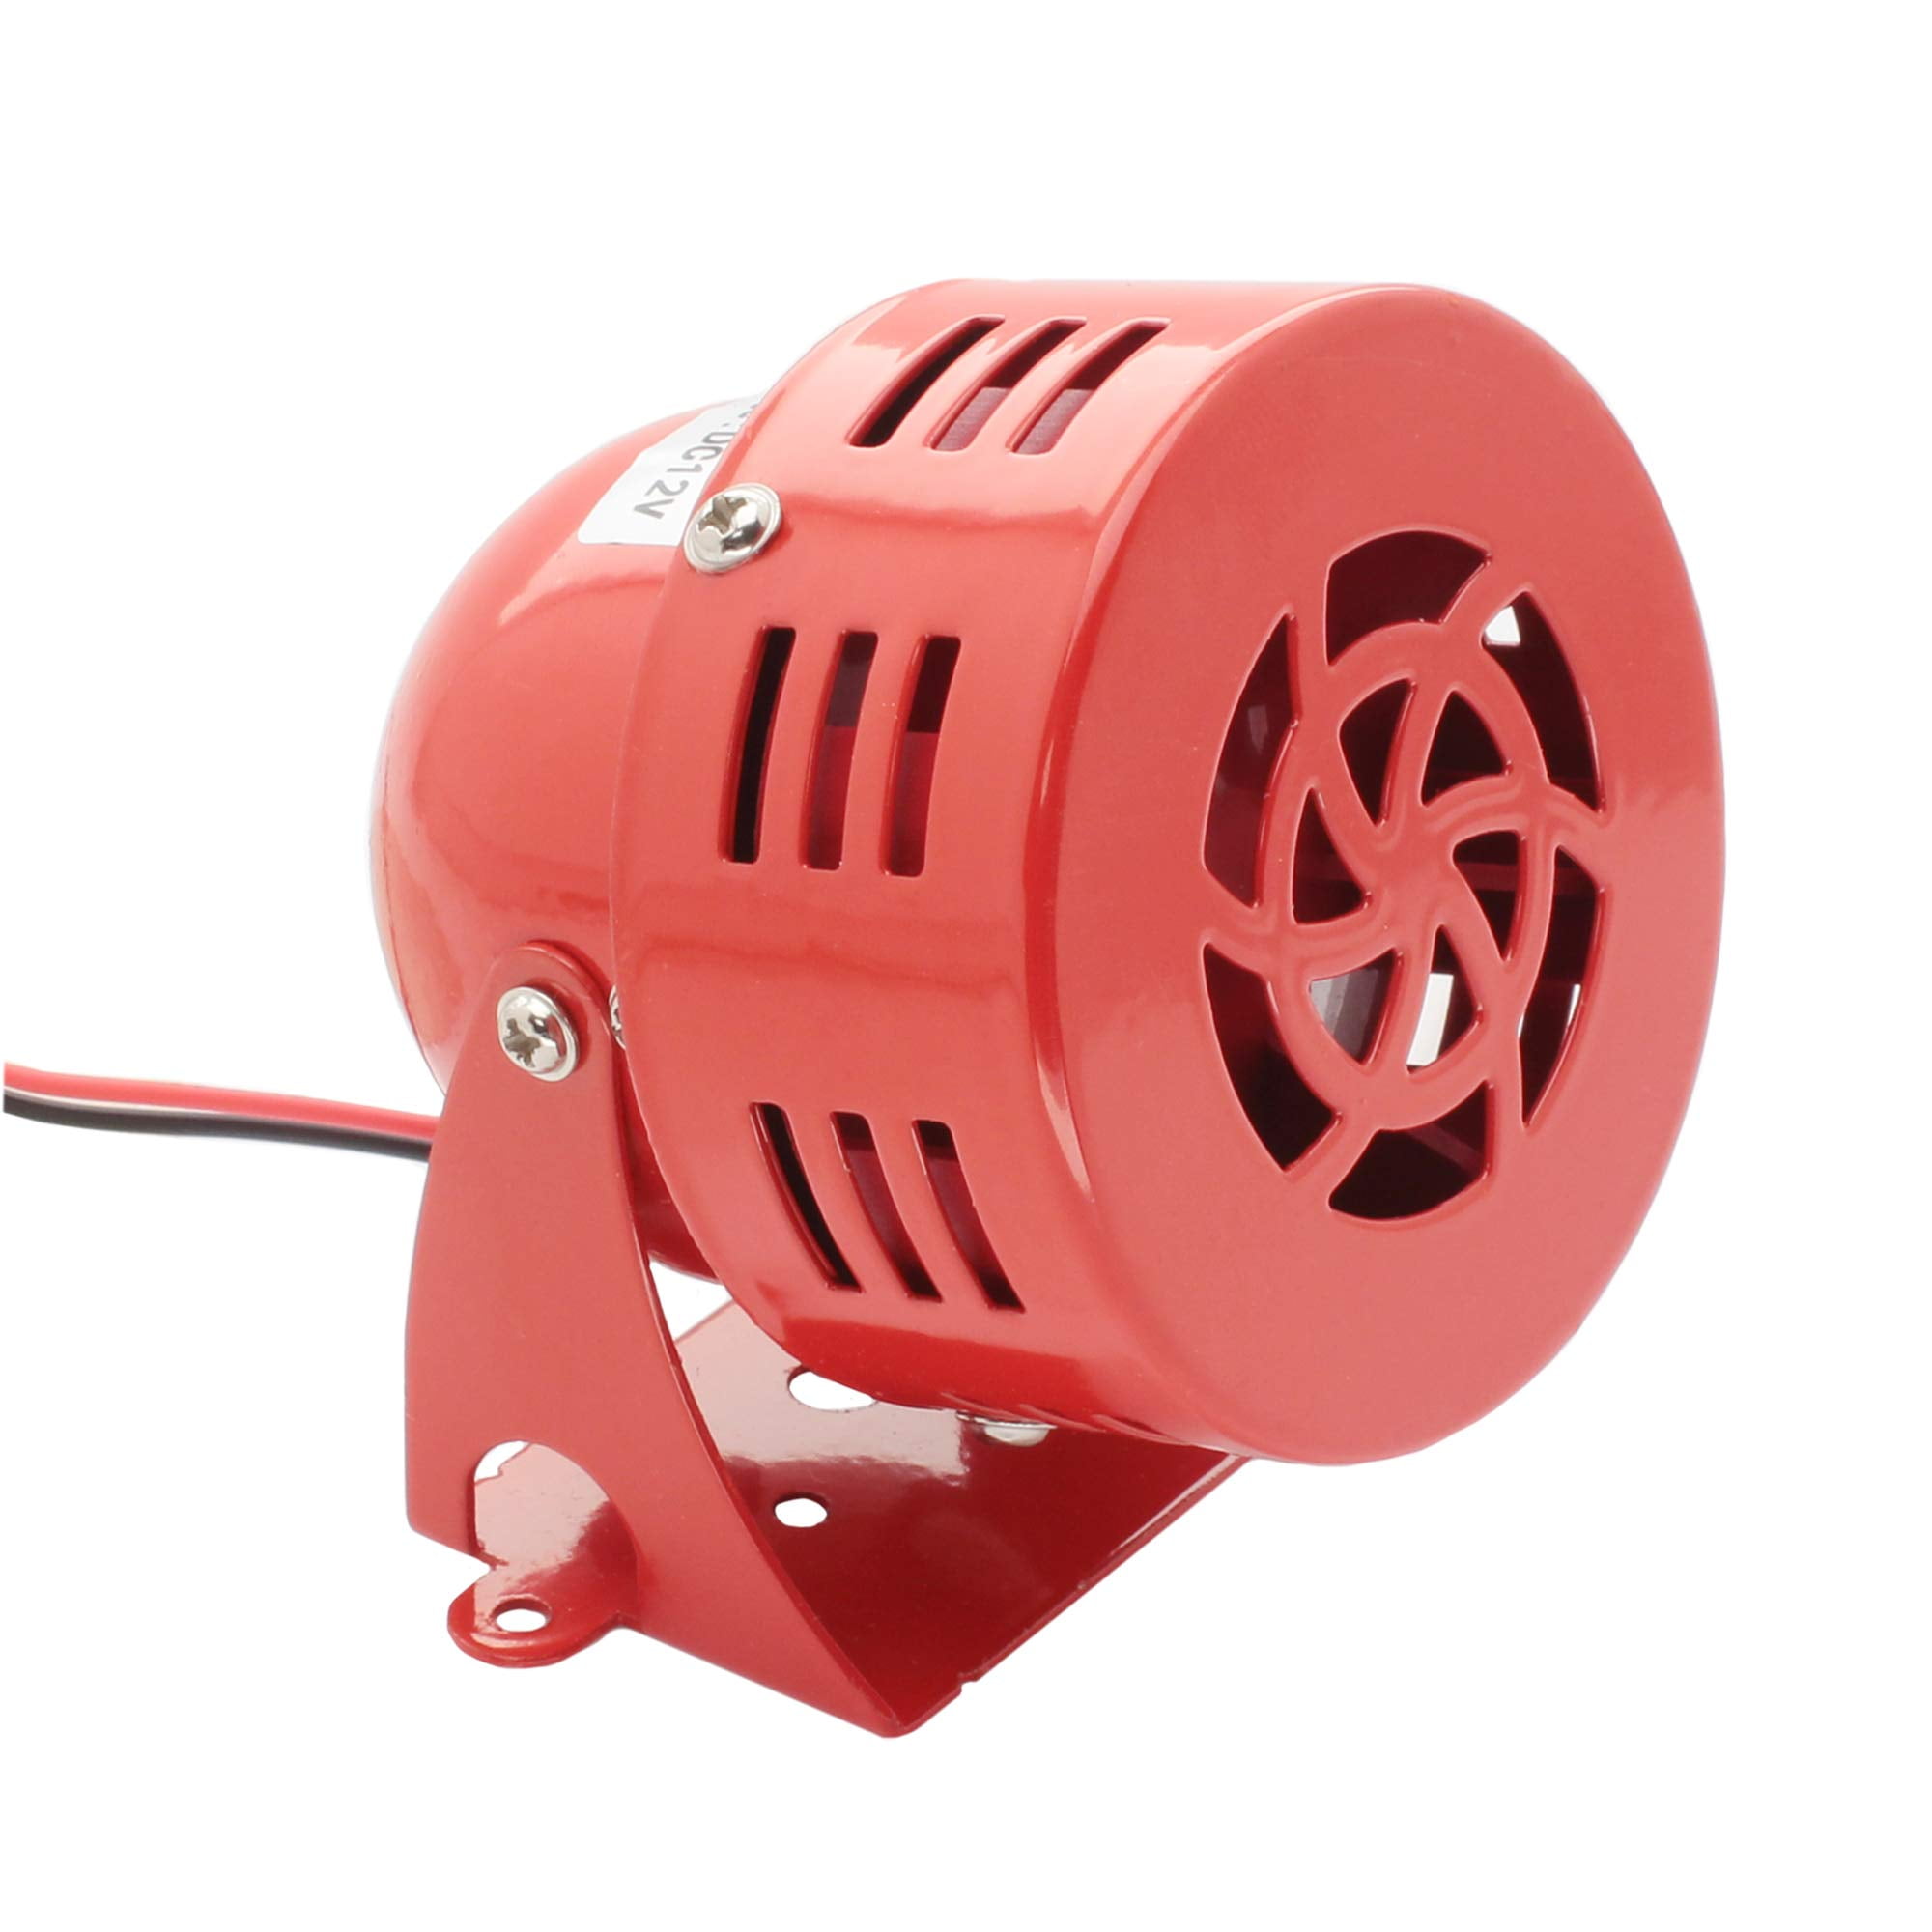 Shopcorp MS-190 12V Industrial Motor Alarm Bell Horn Sound Buzzer Siren 116 Decibels Decibel Security